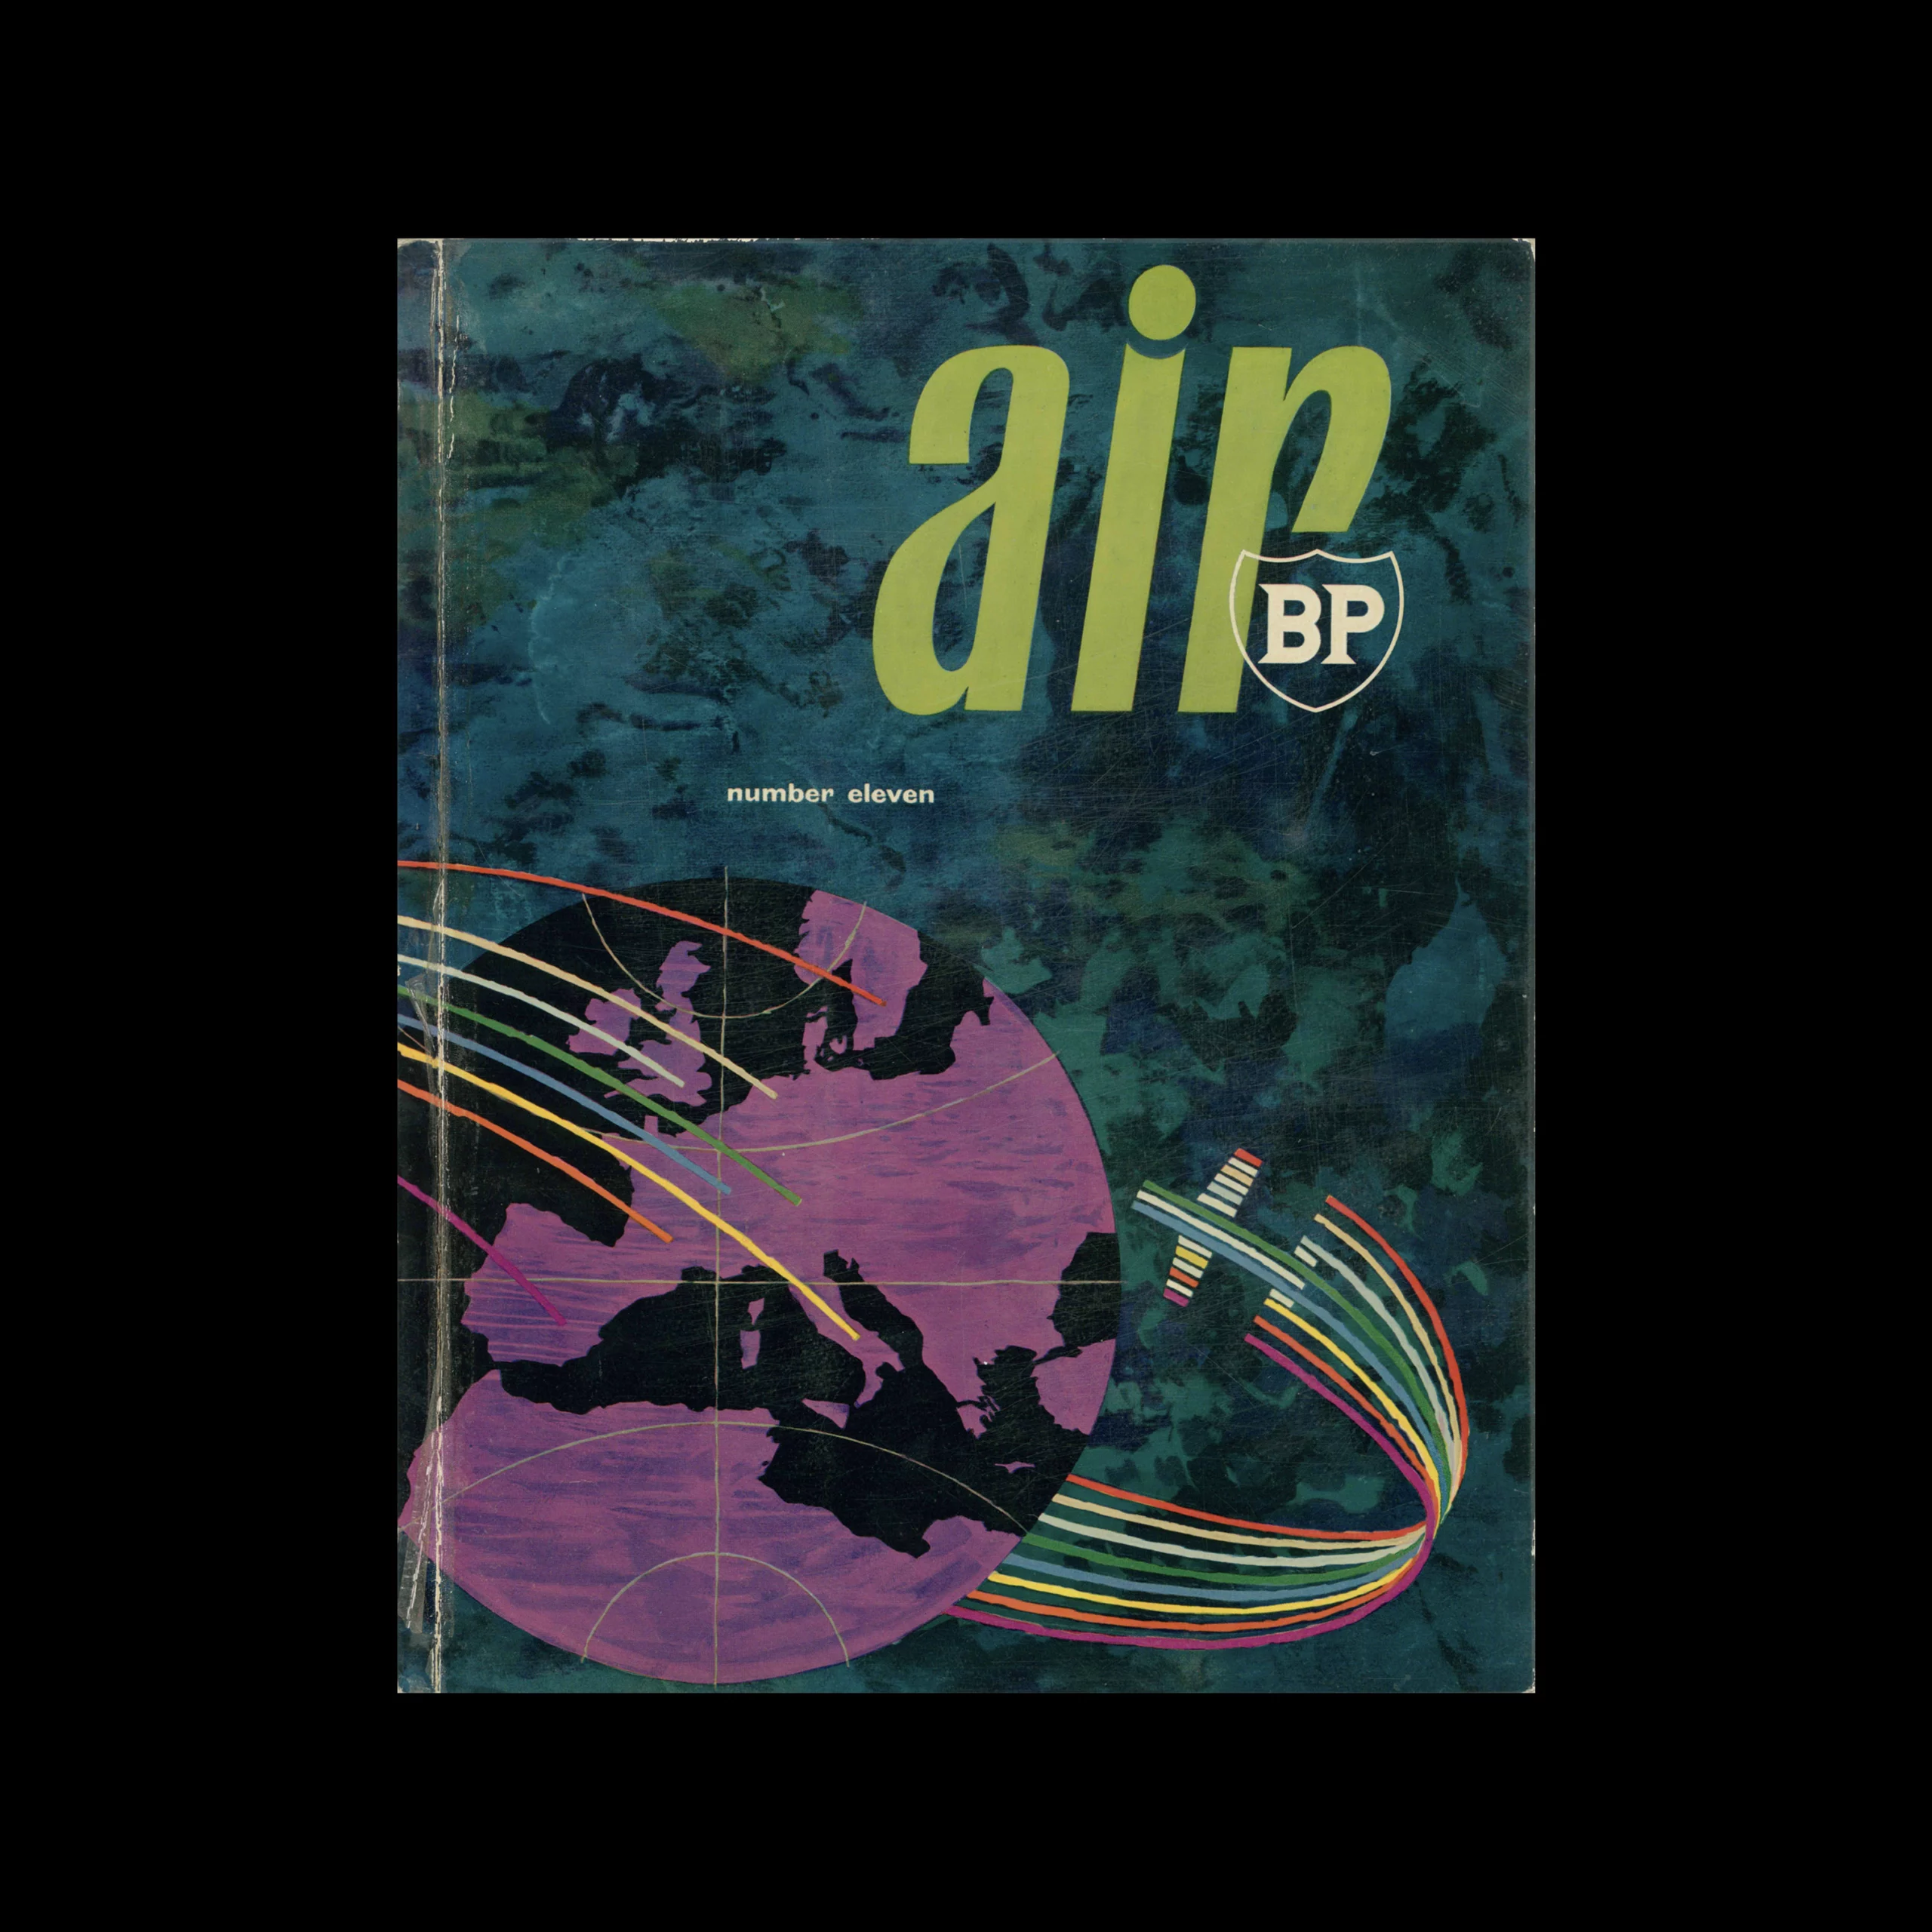 Air BP, 11, 1960s. Designed by Design Partnership Ltd